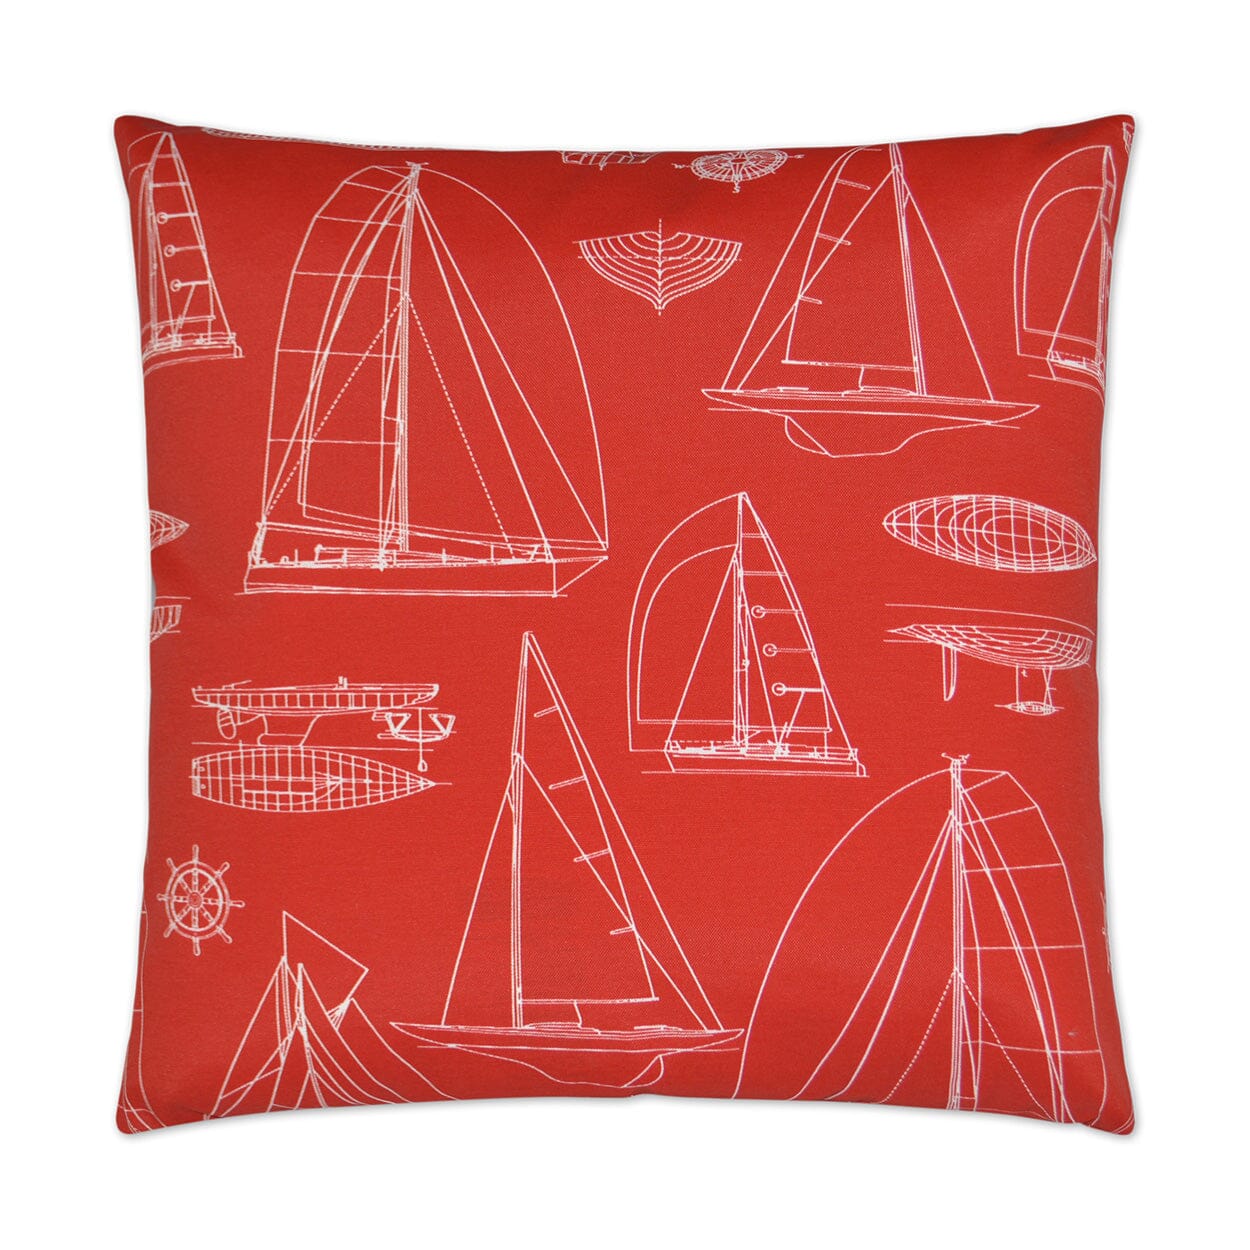 D.V. Kap 22" x 22" Outdoor Throw Pillow | Sailing Red Pillows D.V Kap Outdoor